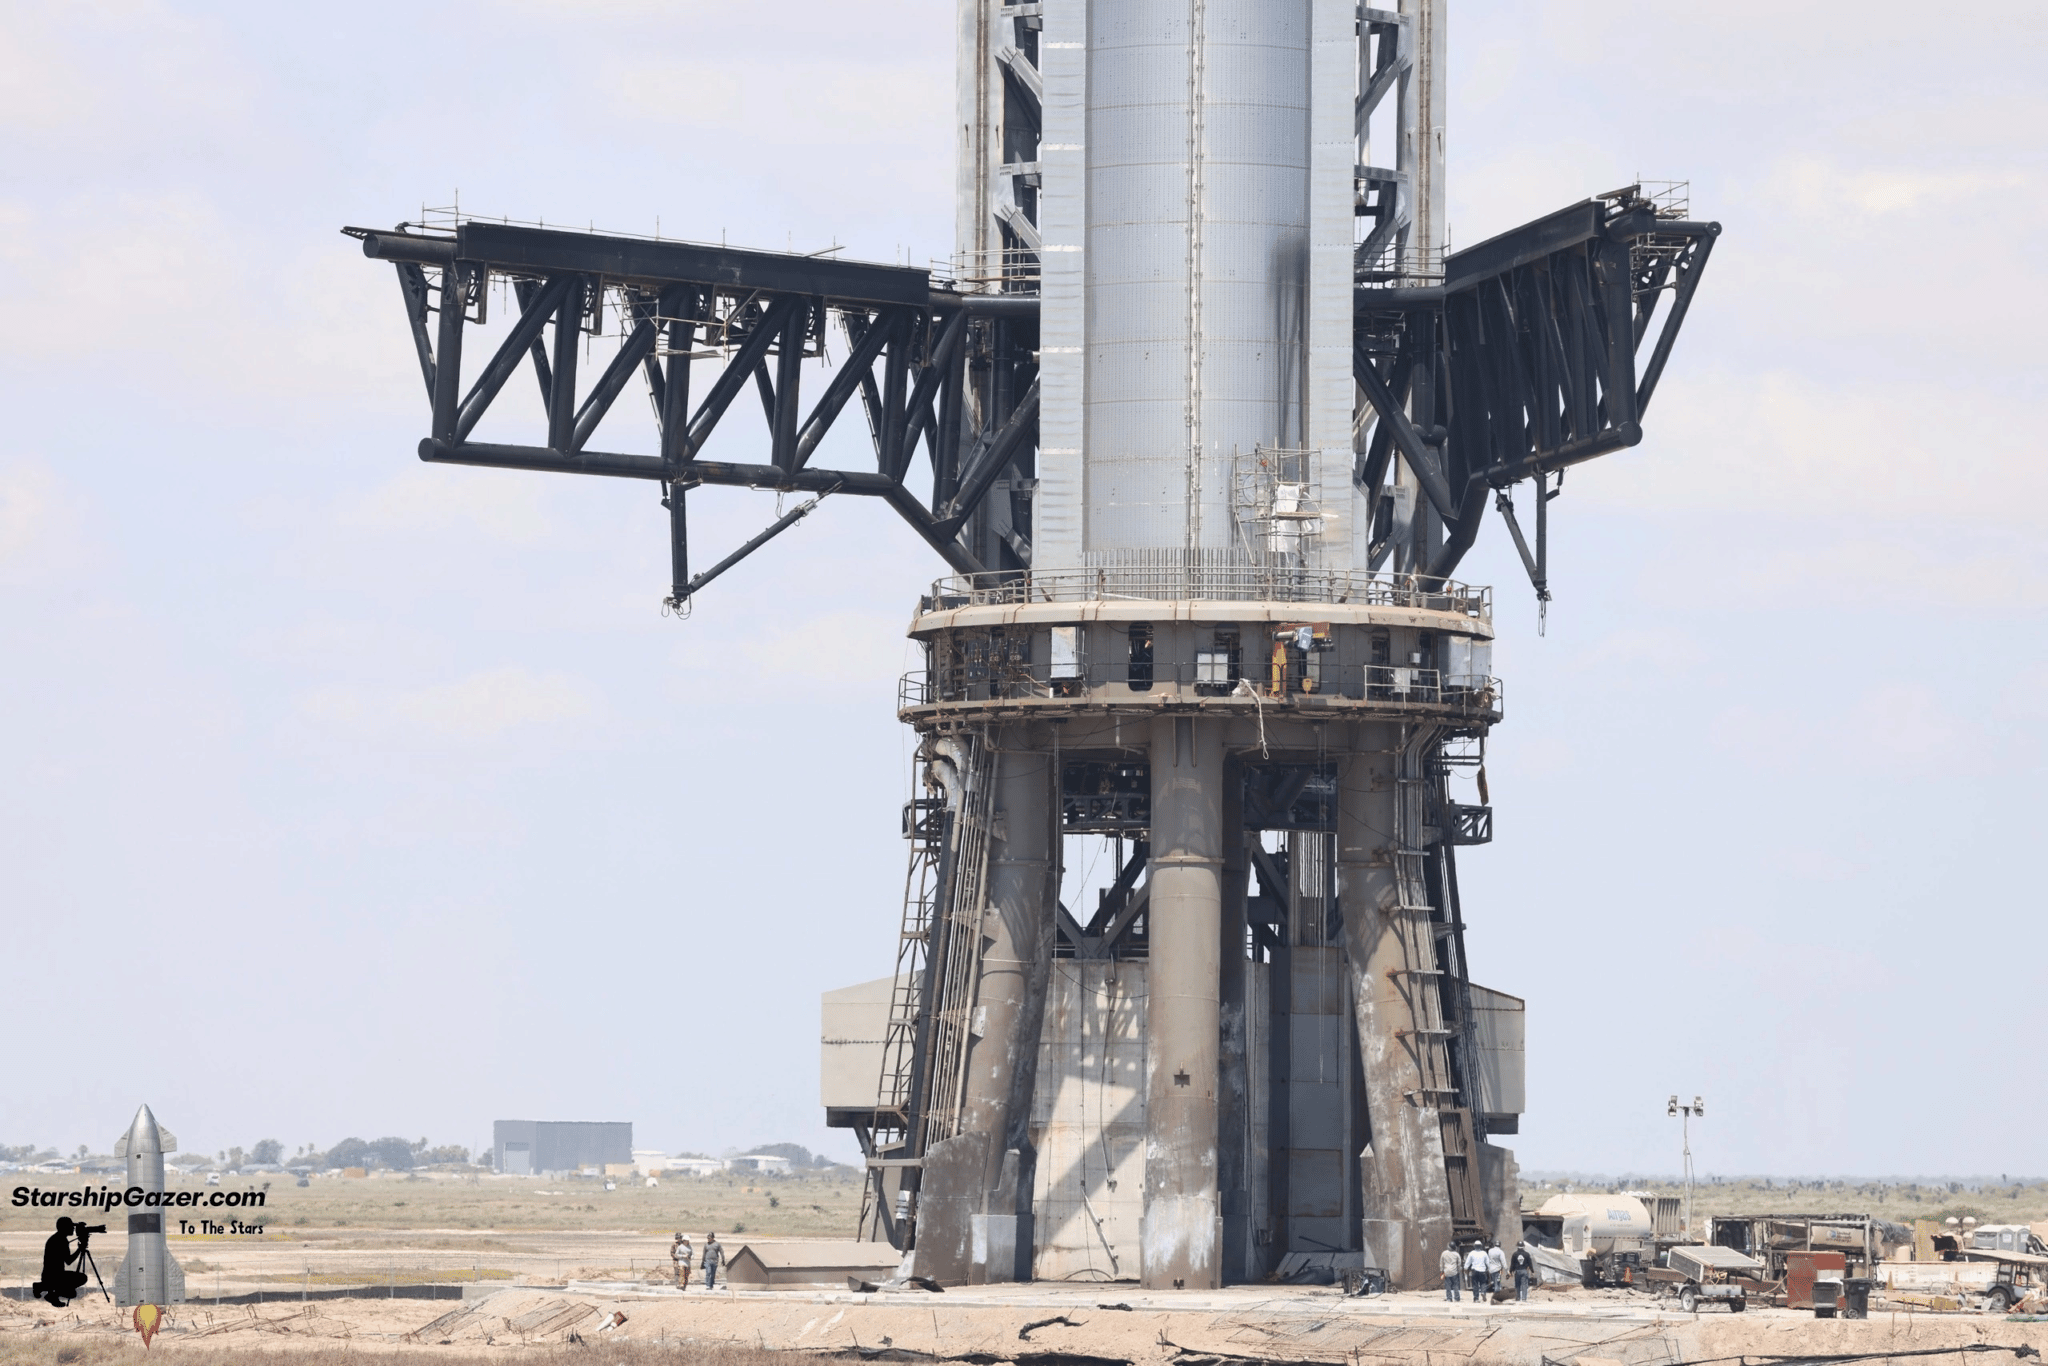 SpaceX Super Heavy B7 prototype rocket damage 4